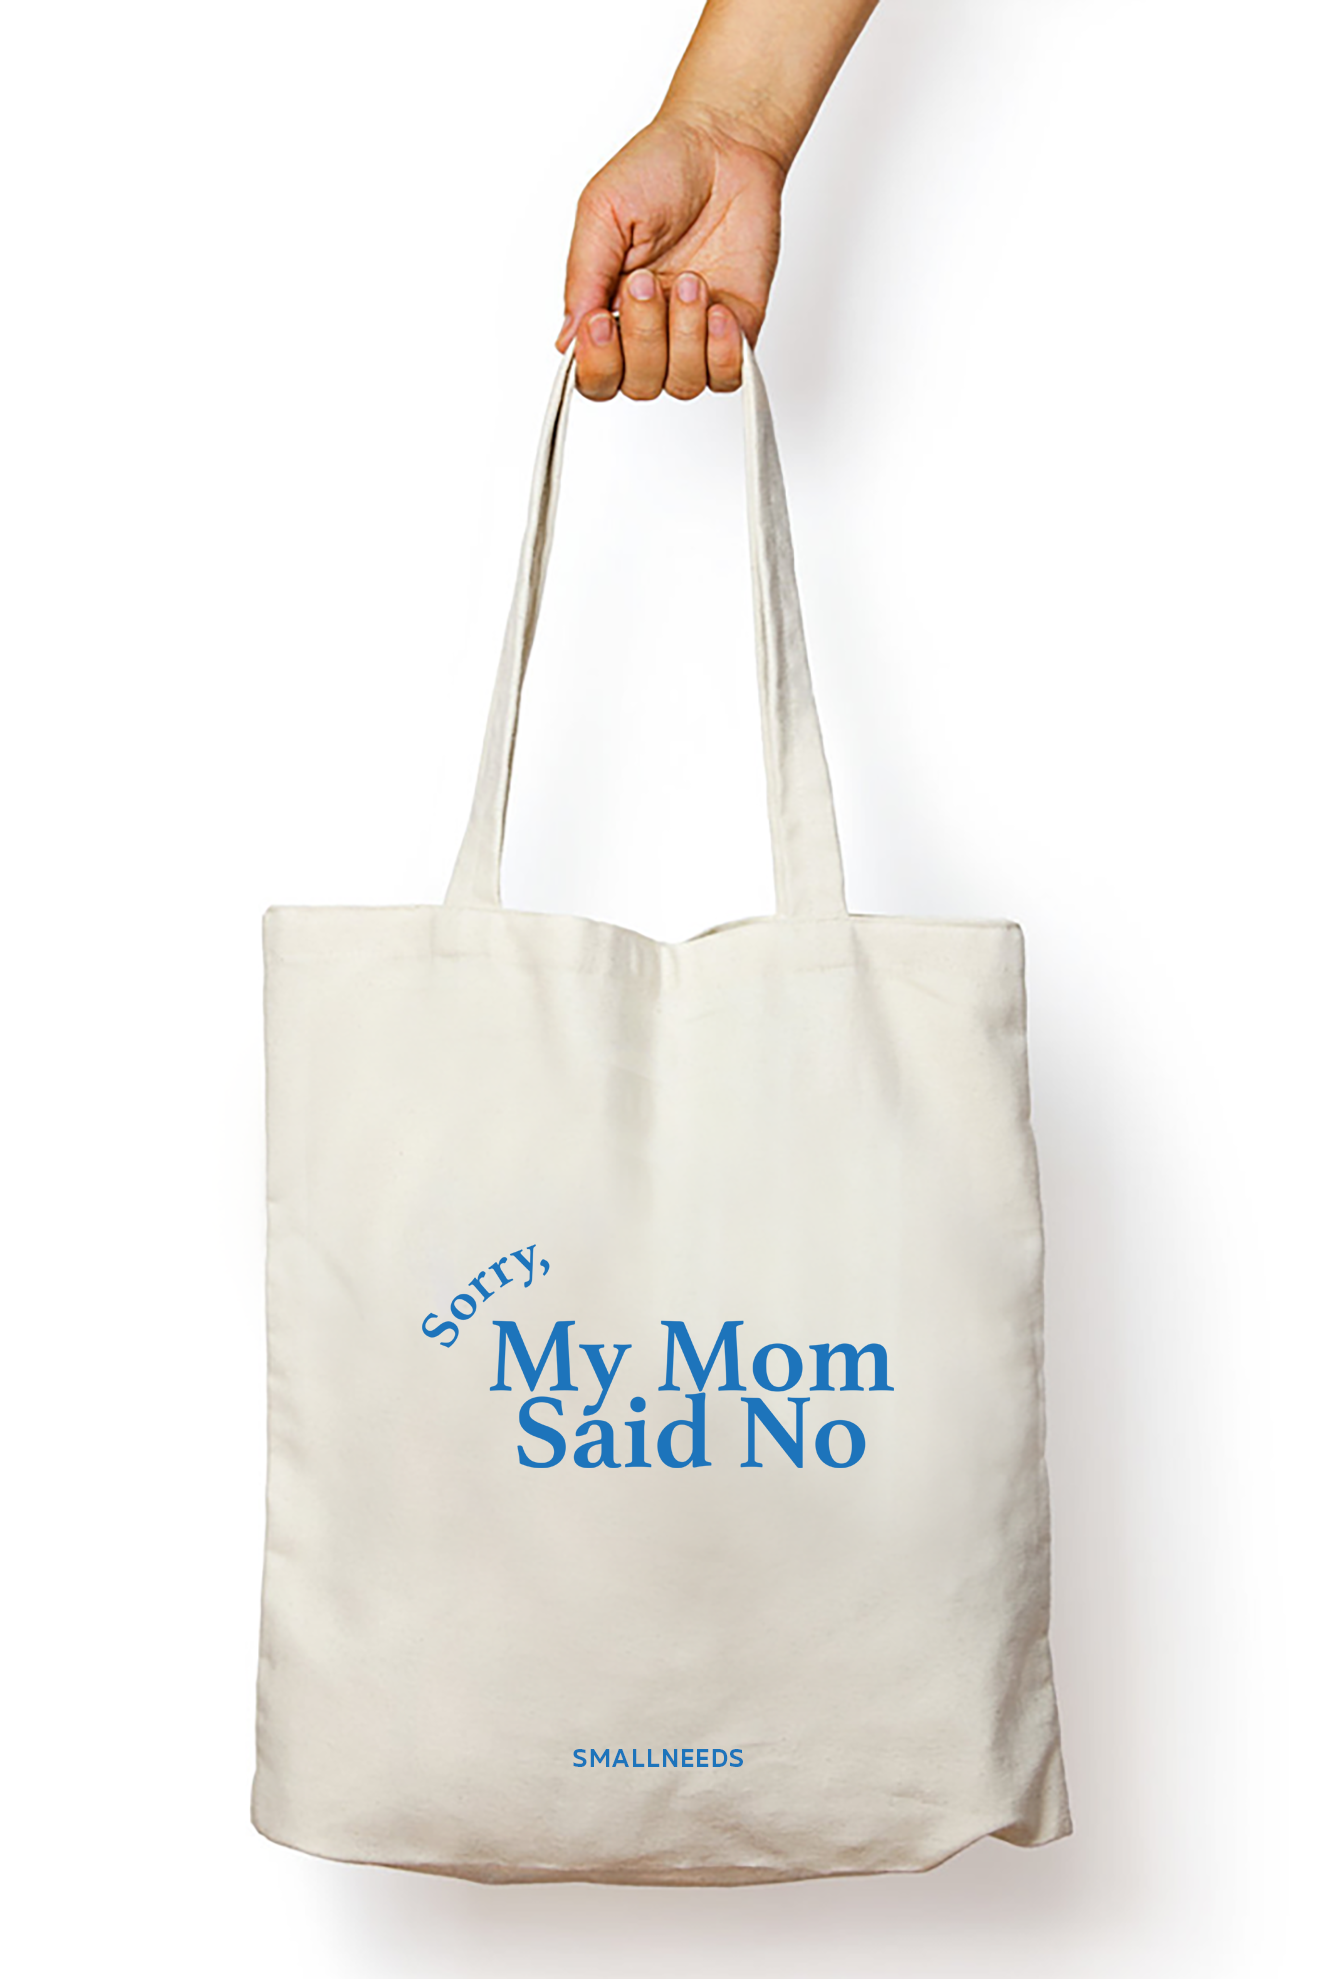 Sorry, My Mom Said No Tote Bag